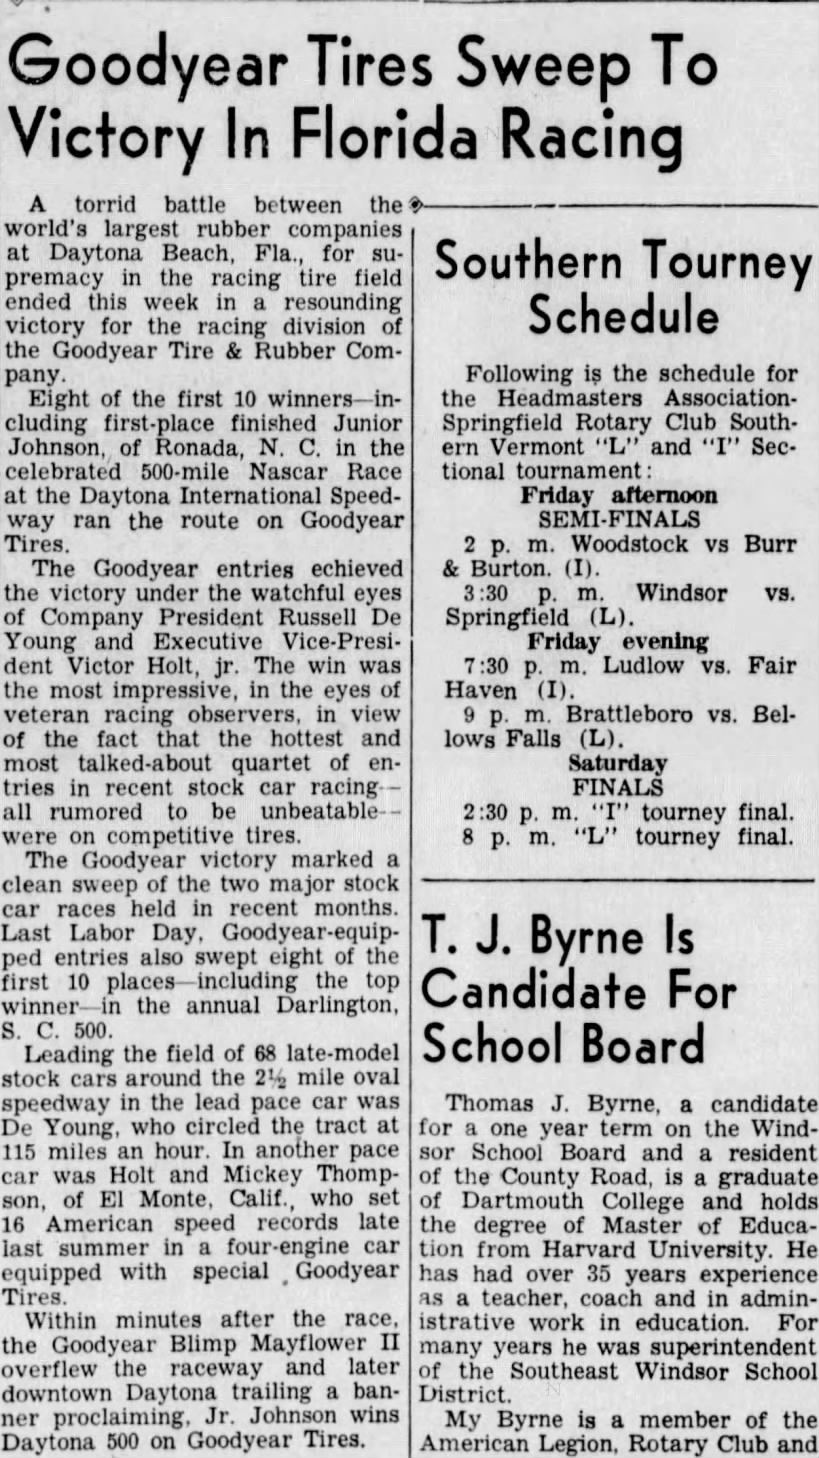 1960 Daytona 500 Goodyear win - Vermont Journal - February 25, 1960 - Page 1